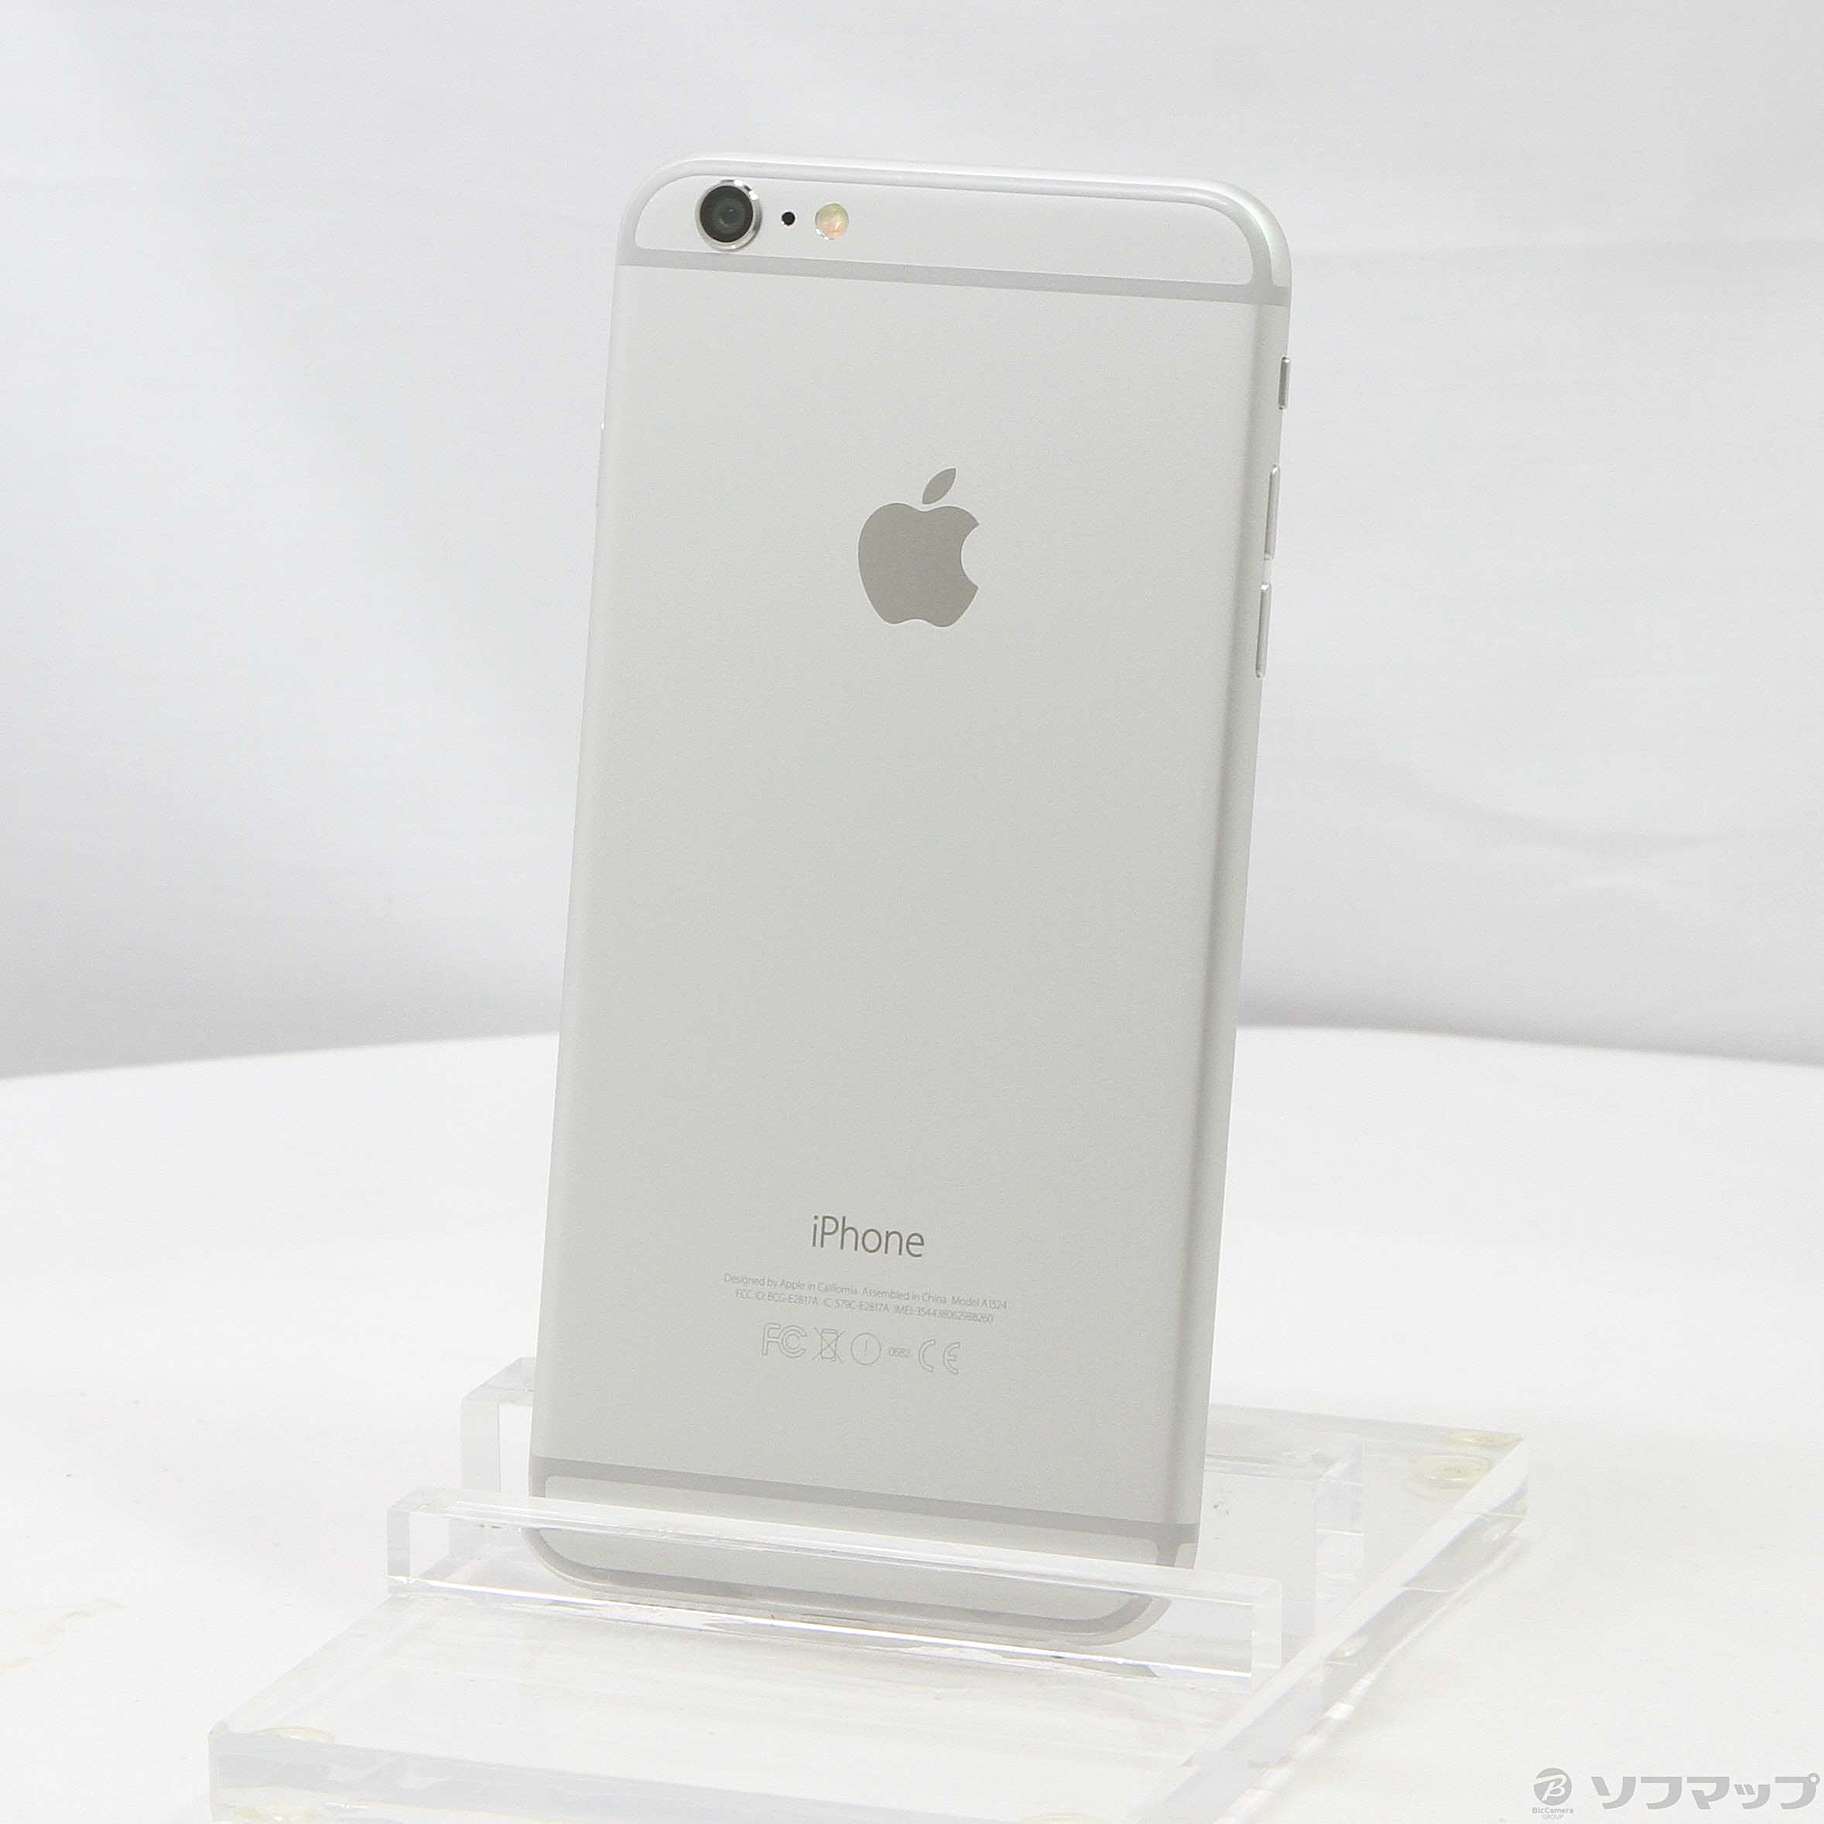 iPhone 6 Silver 16 GB docomo制限〇 - スマートフォン本体